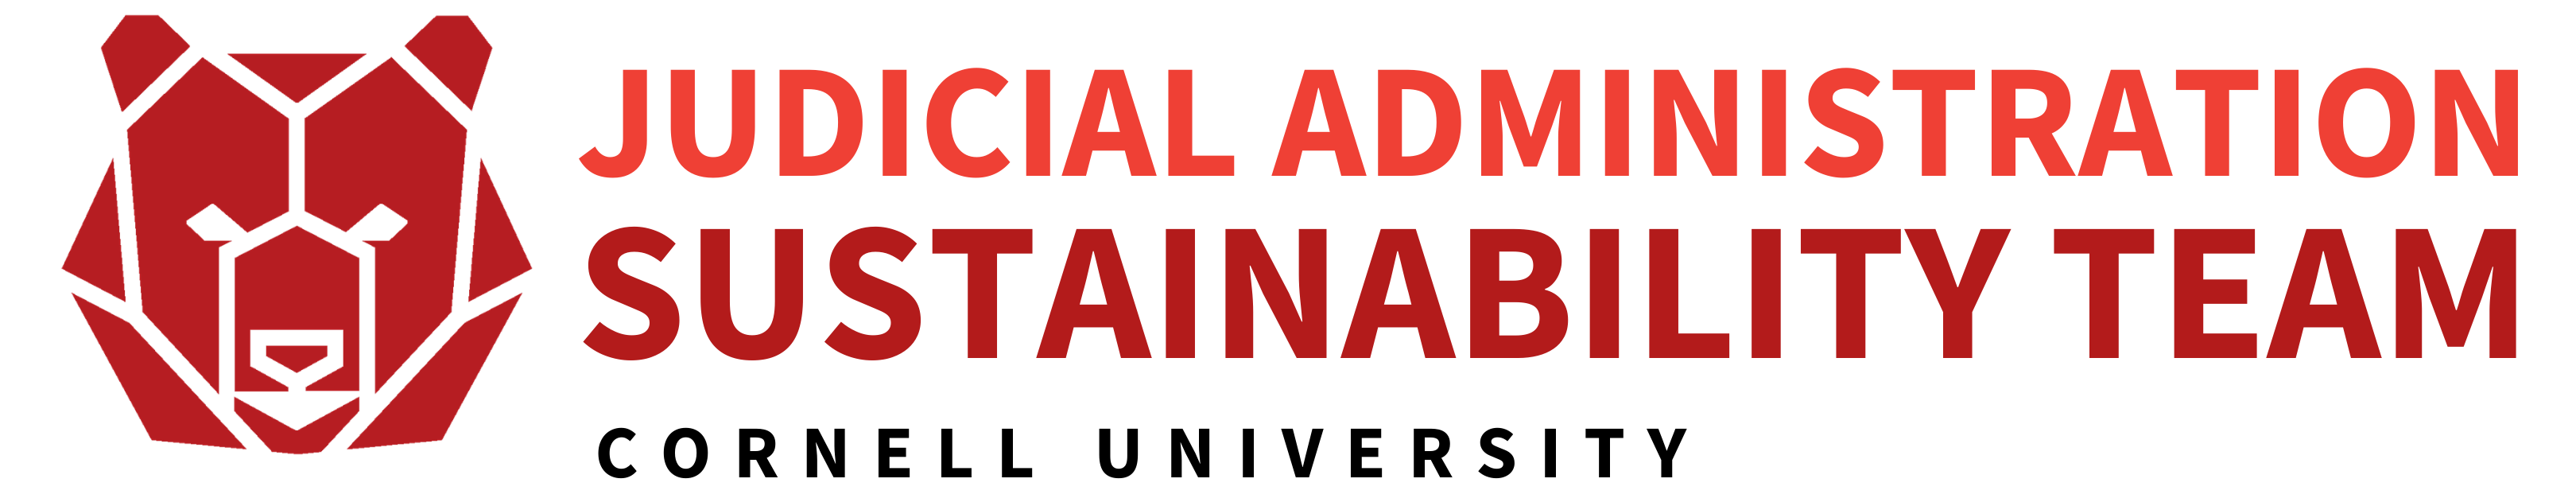 Judicial Admin Green Team Logo